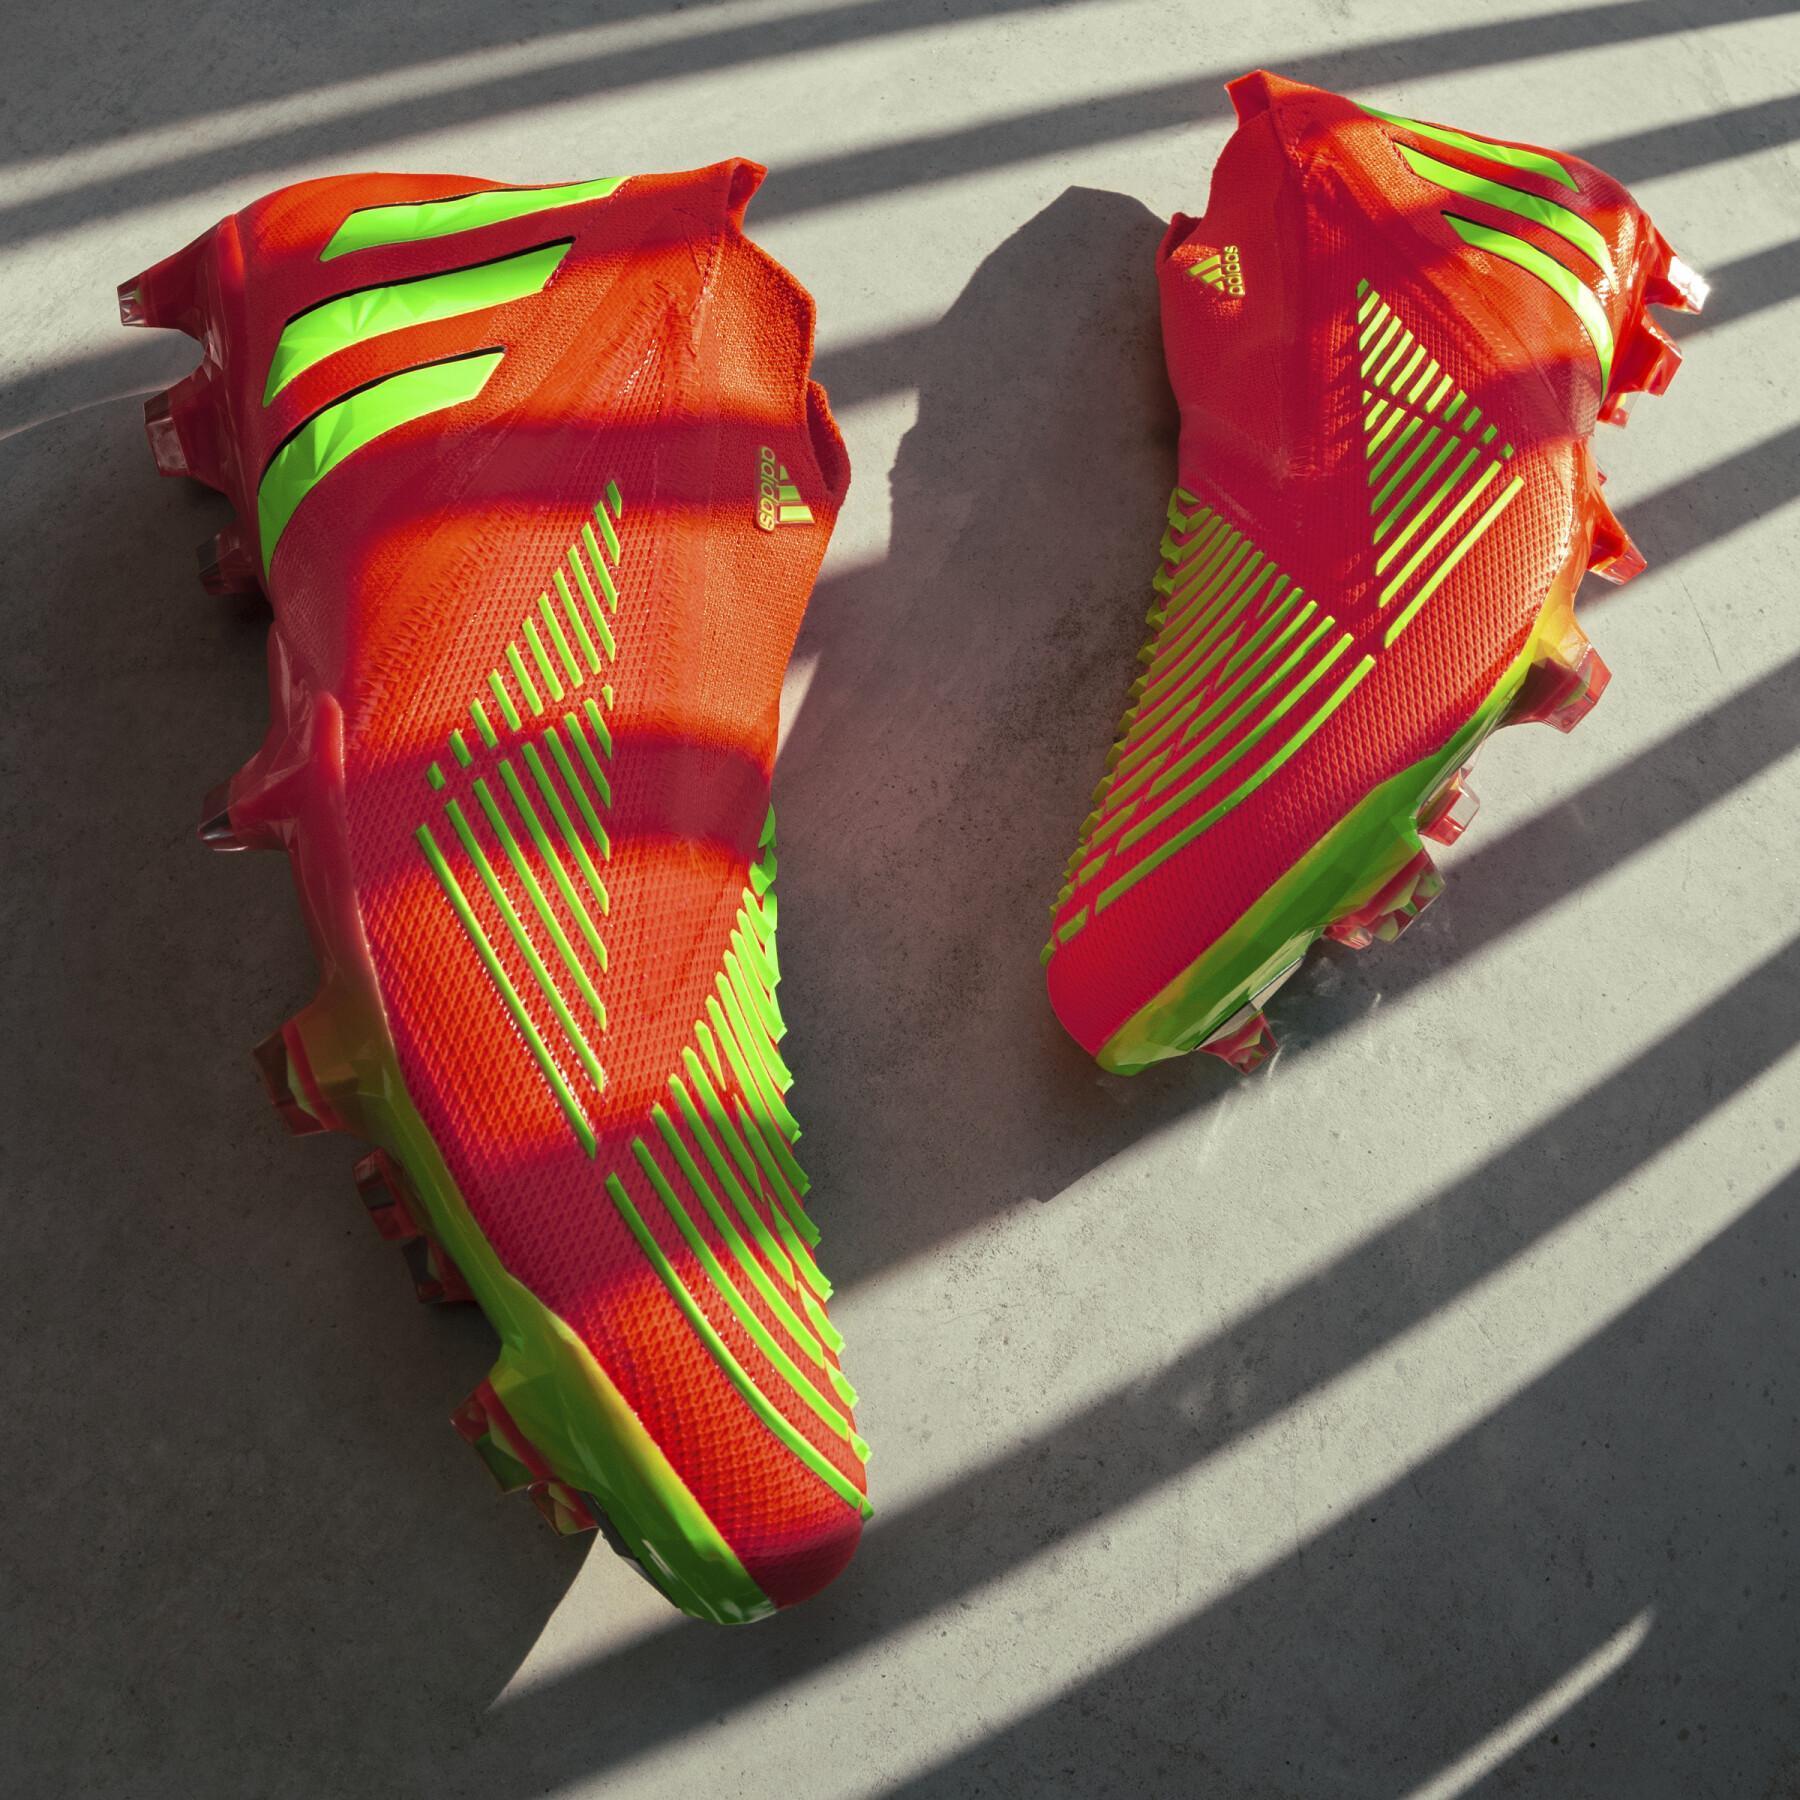 Soccer shoes adidas Predator Edge+ FG - Game Data Pack